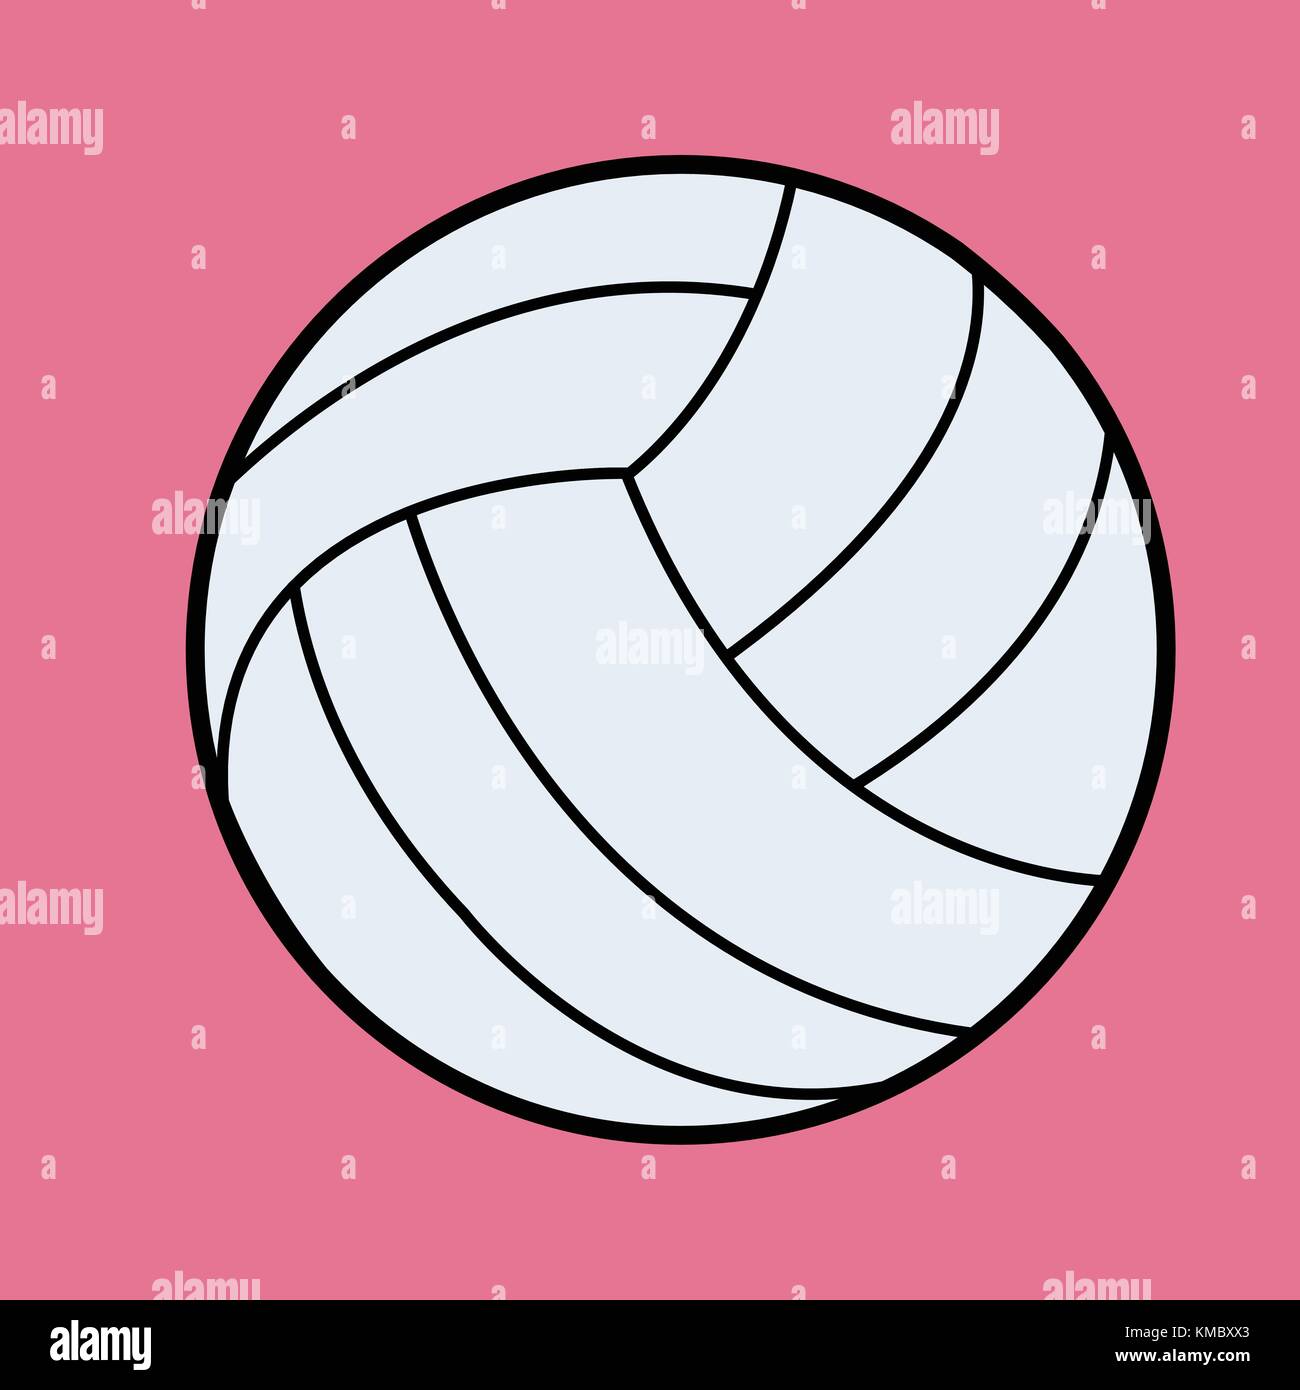 Volleyball Cartoon Stock Photos & Volleyball Cartoon Stock Images - Alamy